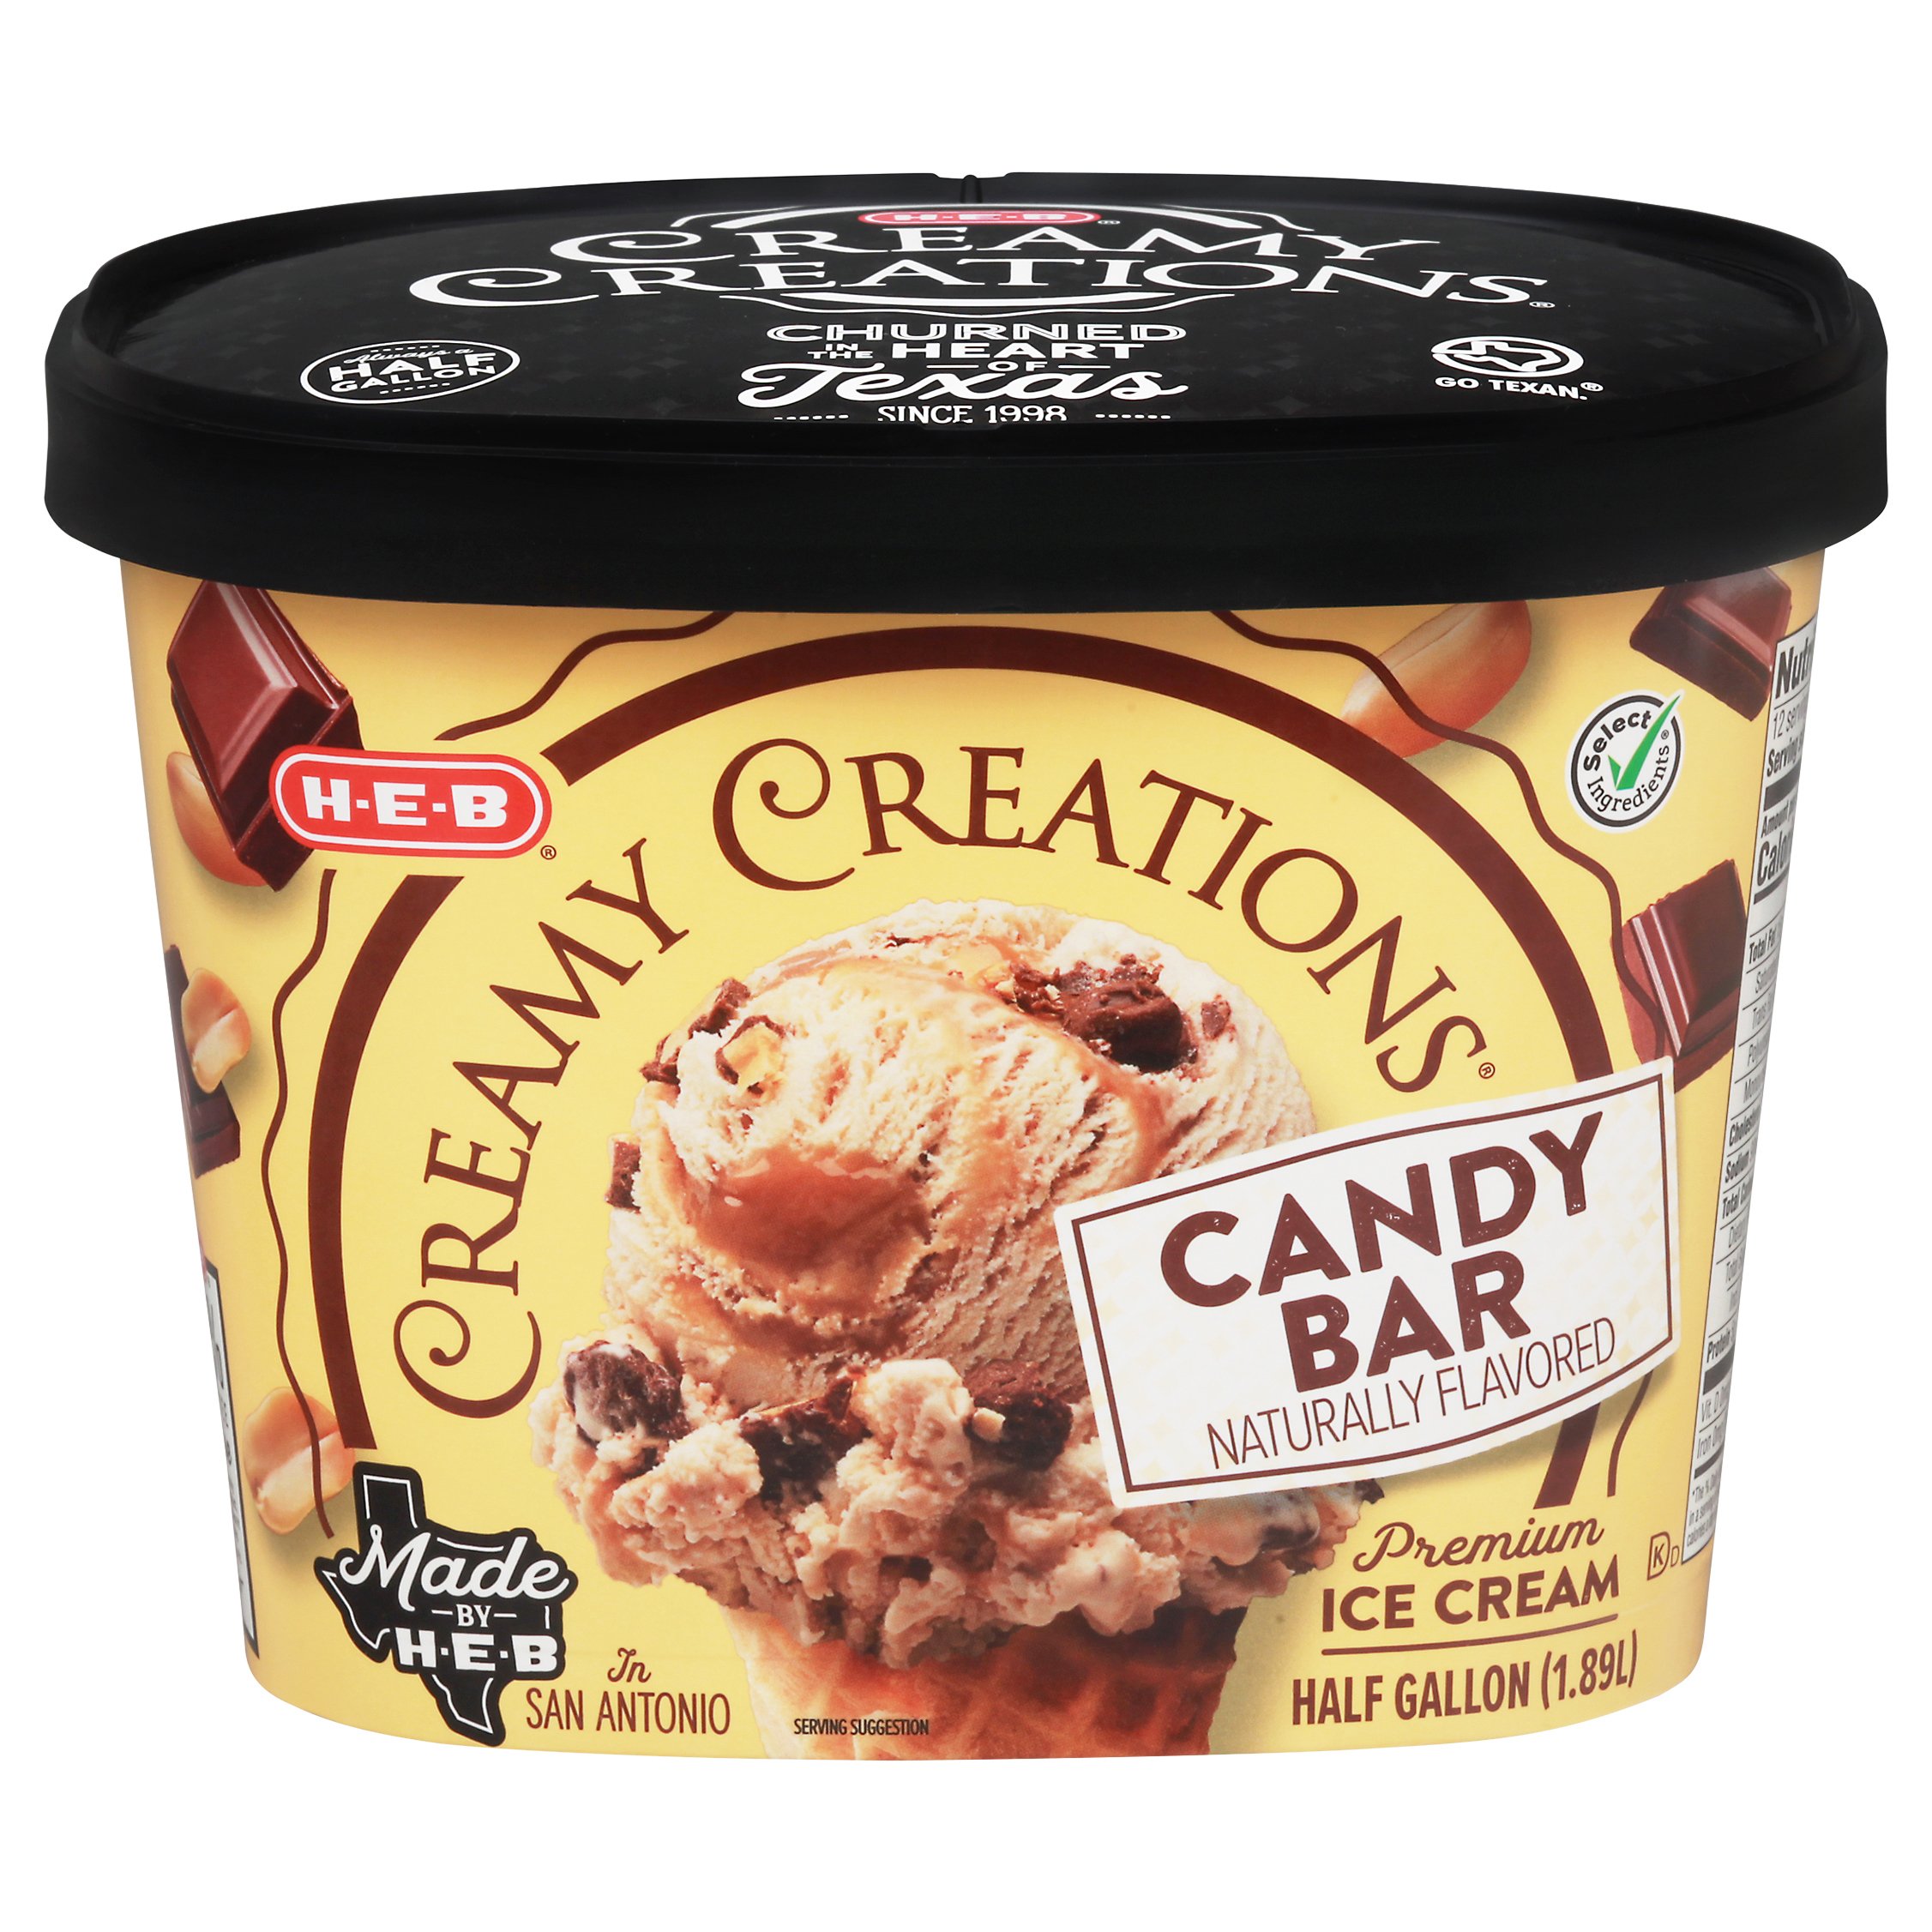 H E B Select Ingredients Creamy Creations Candy Bar Ice Cream Half Gallon Shop Ice Cream Treats At H E B